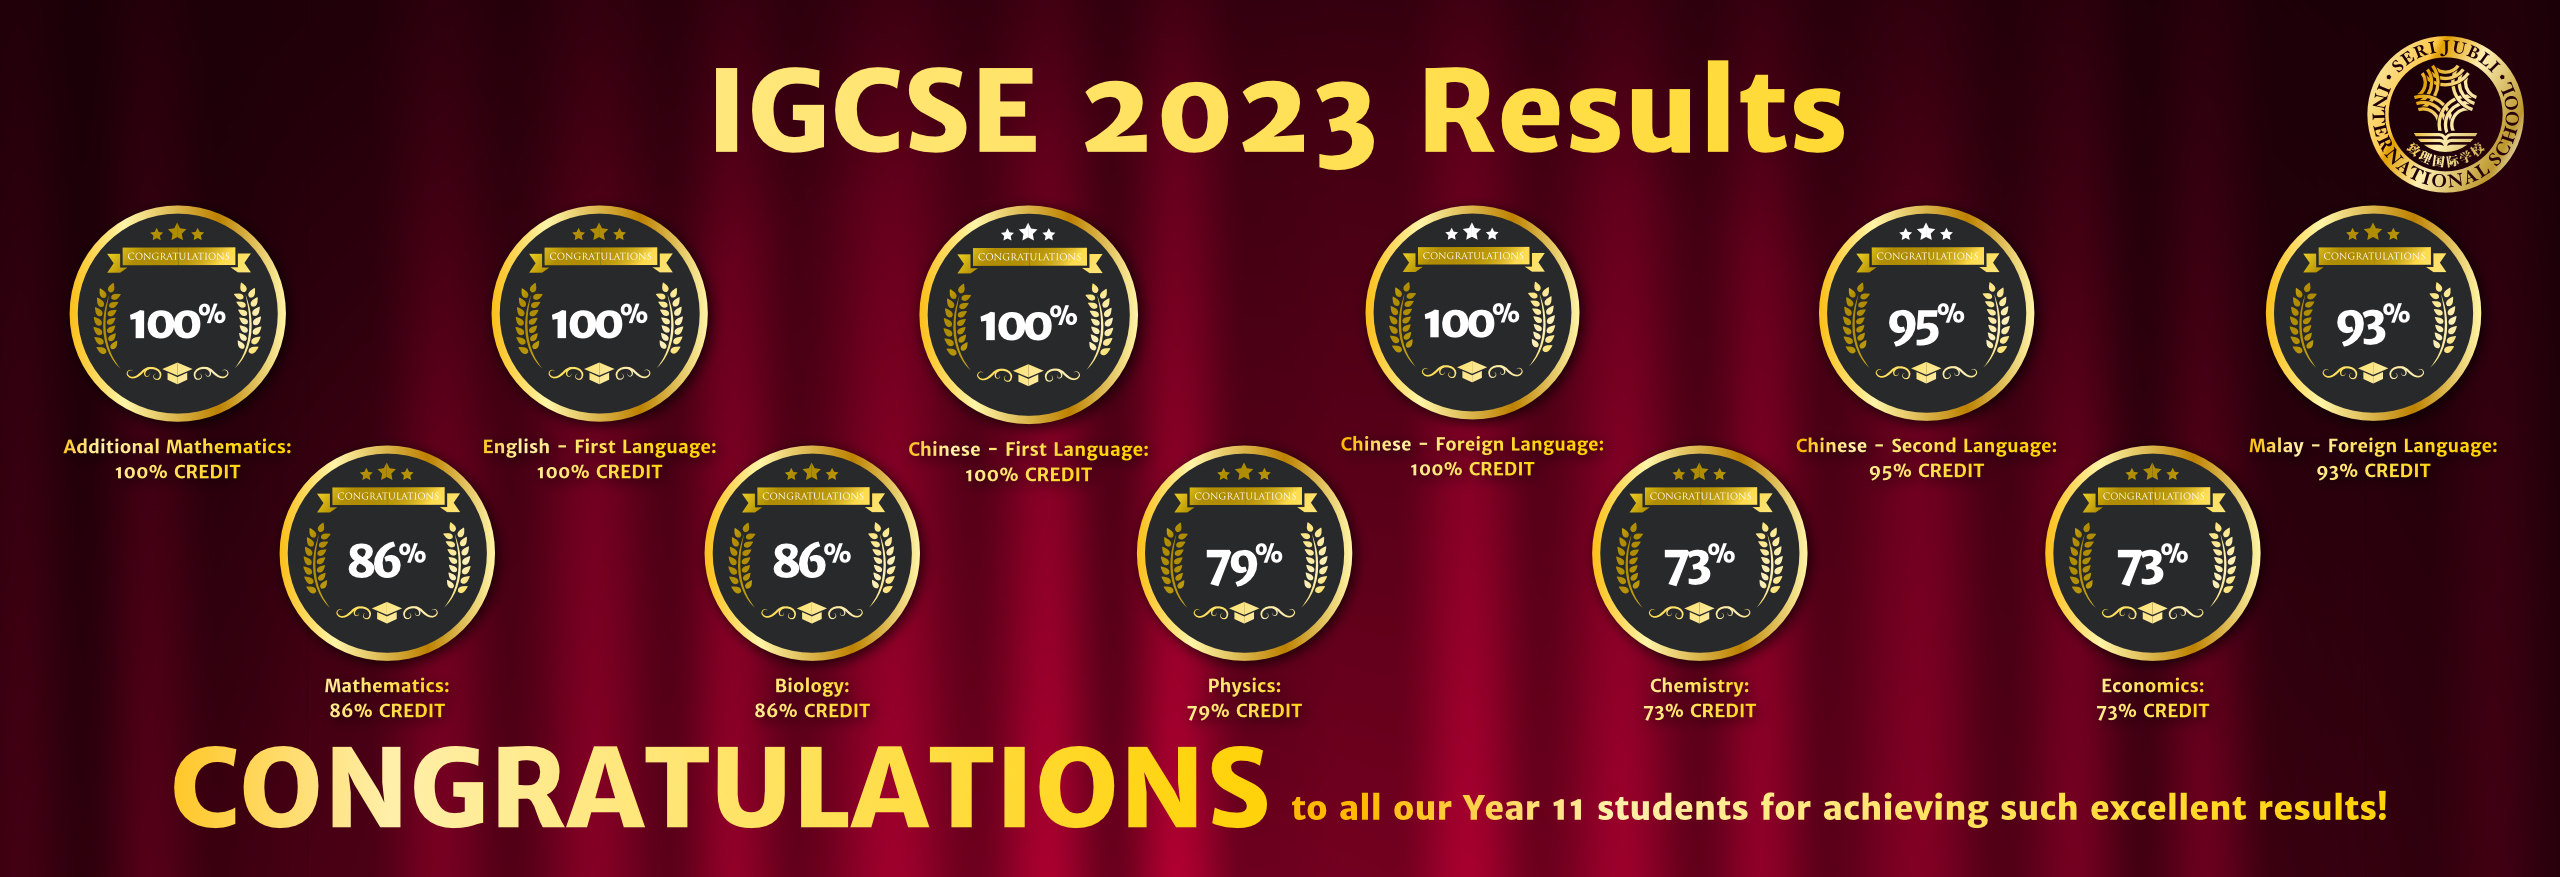 2023 IGCSE Result 1